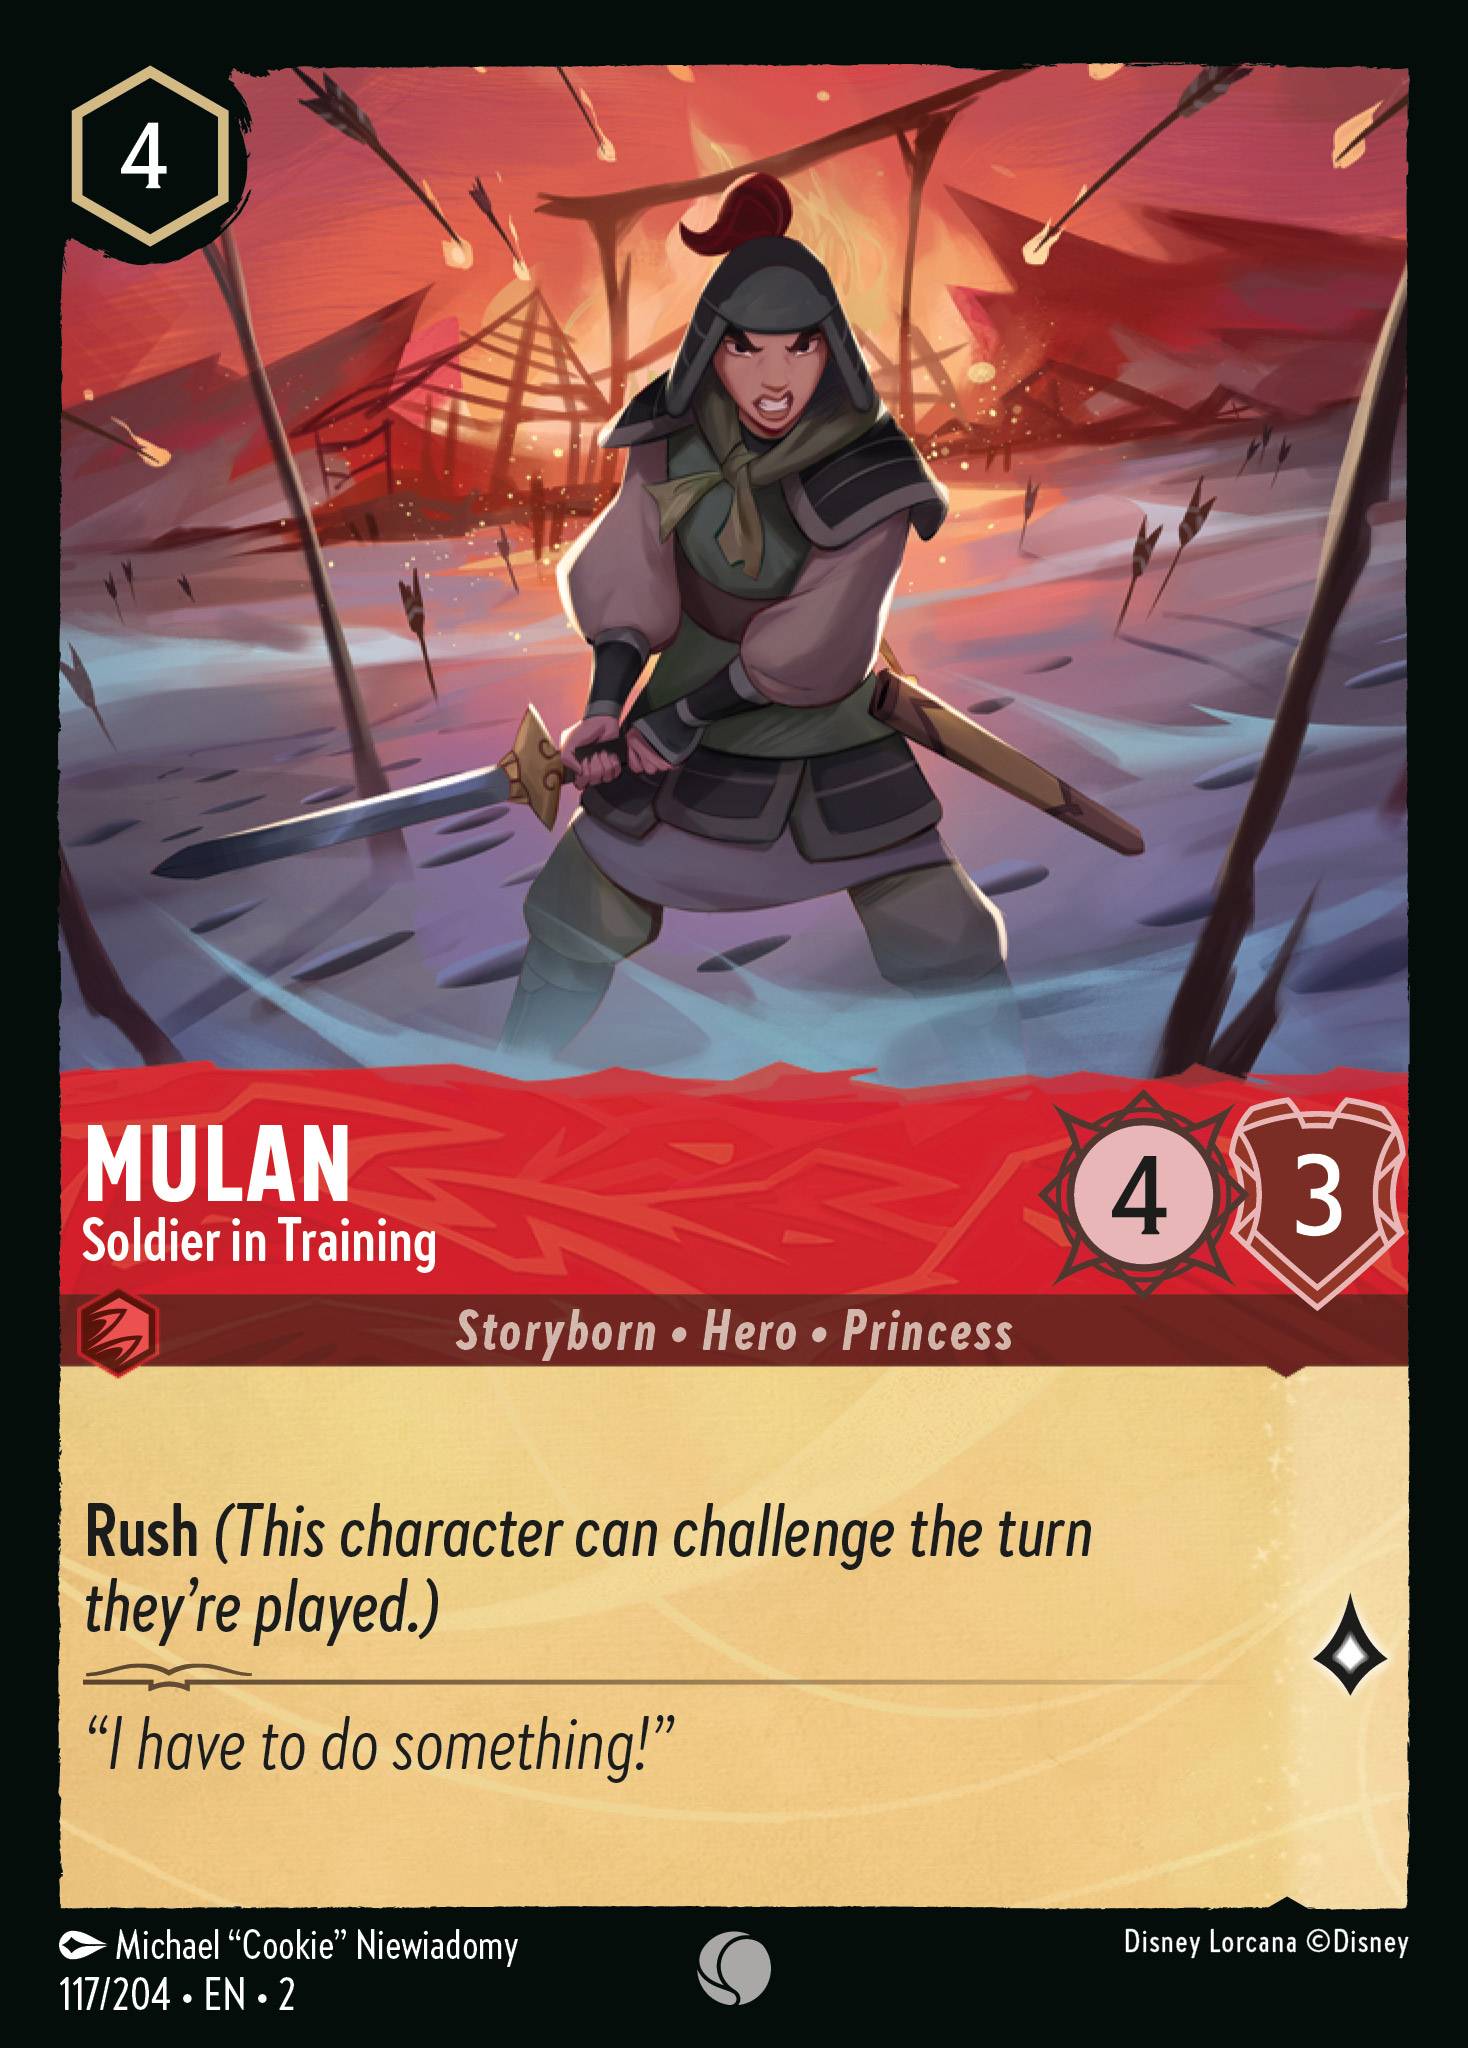 Lorcana Deck Box - Rise of the Floodborn - Mulan